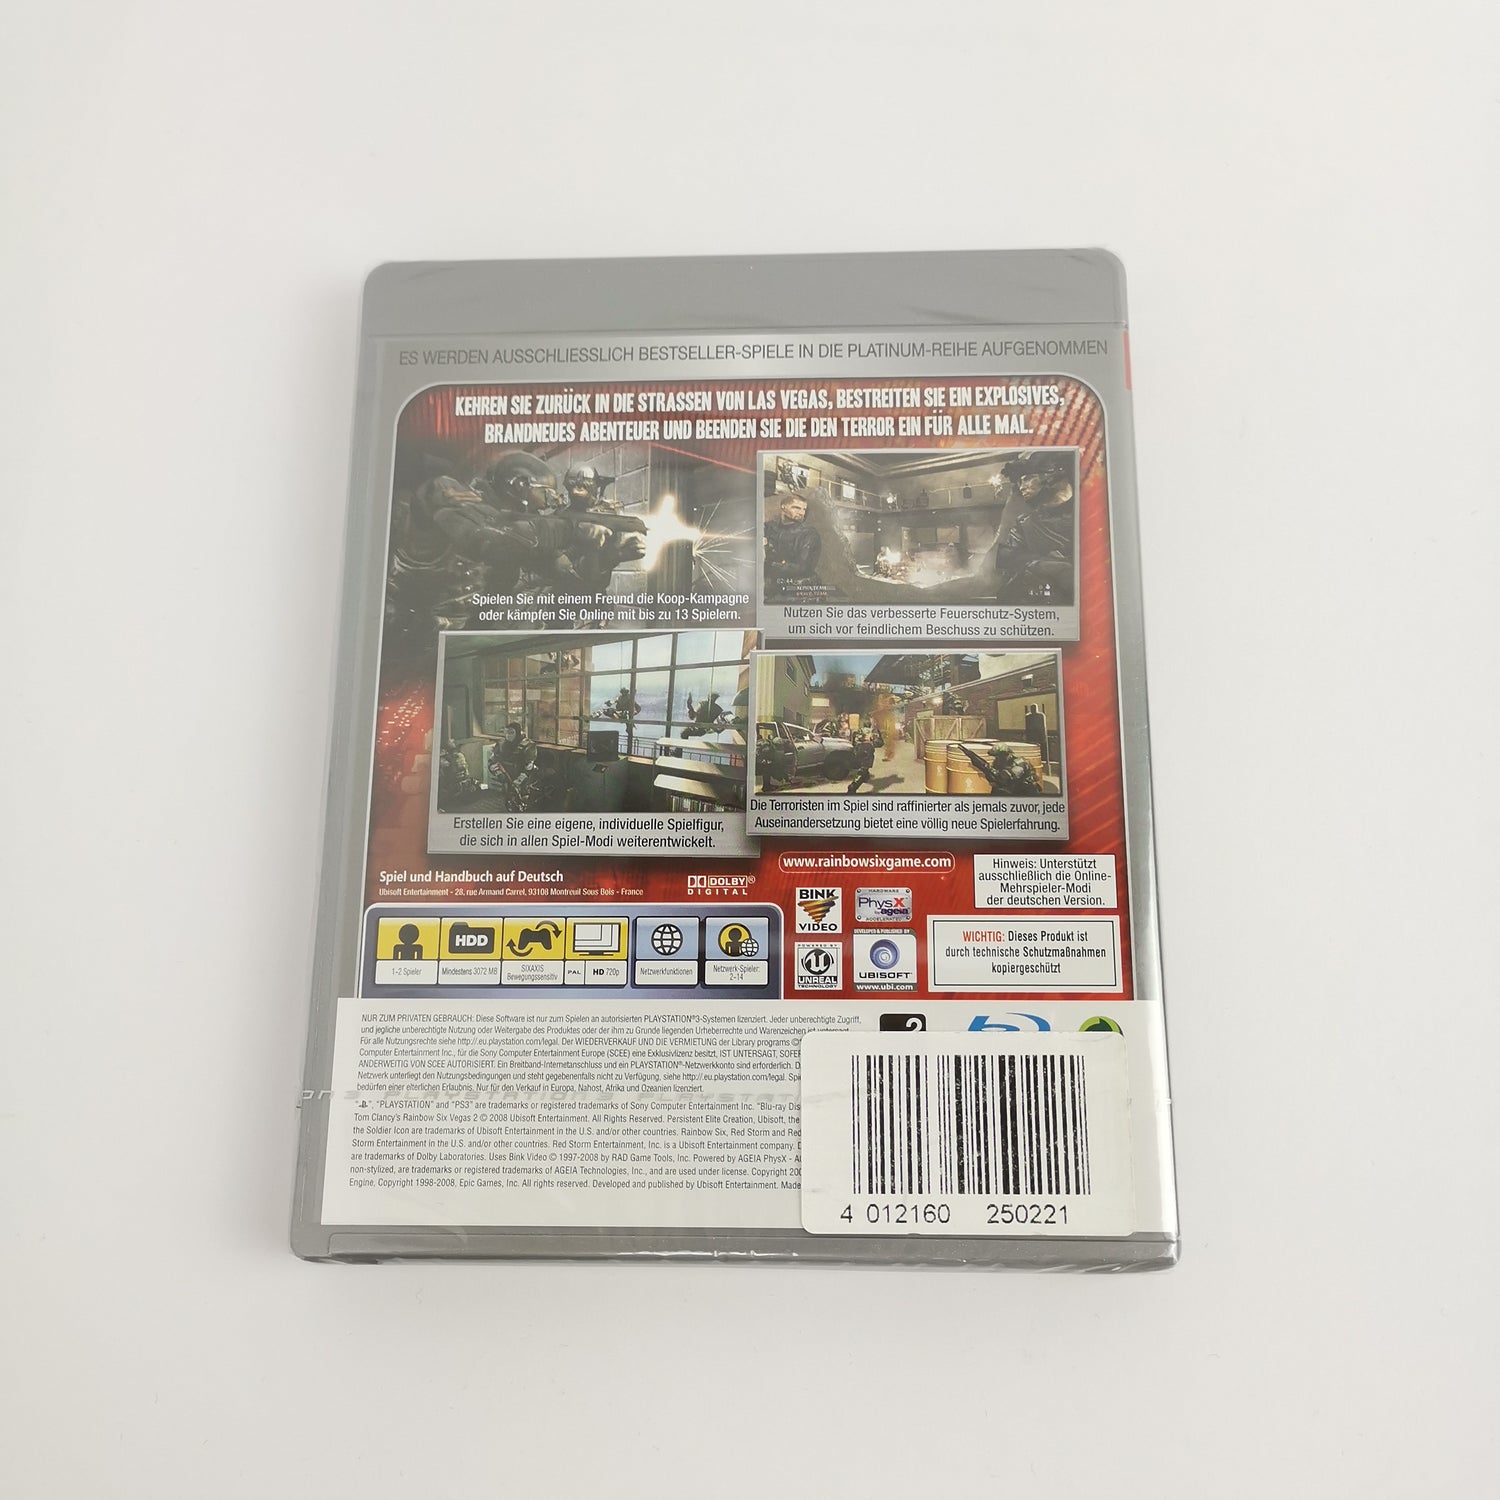 Sony Playstation 3 Game: Tom Clancy's Rainbow Six Vegas 2 | Platinum USK18 NEW